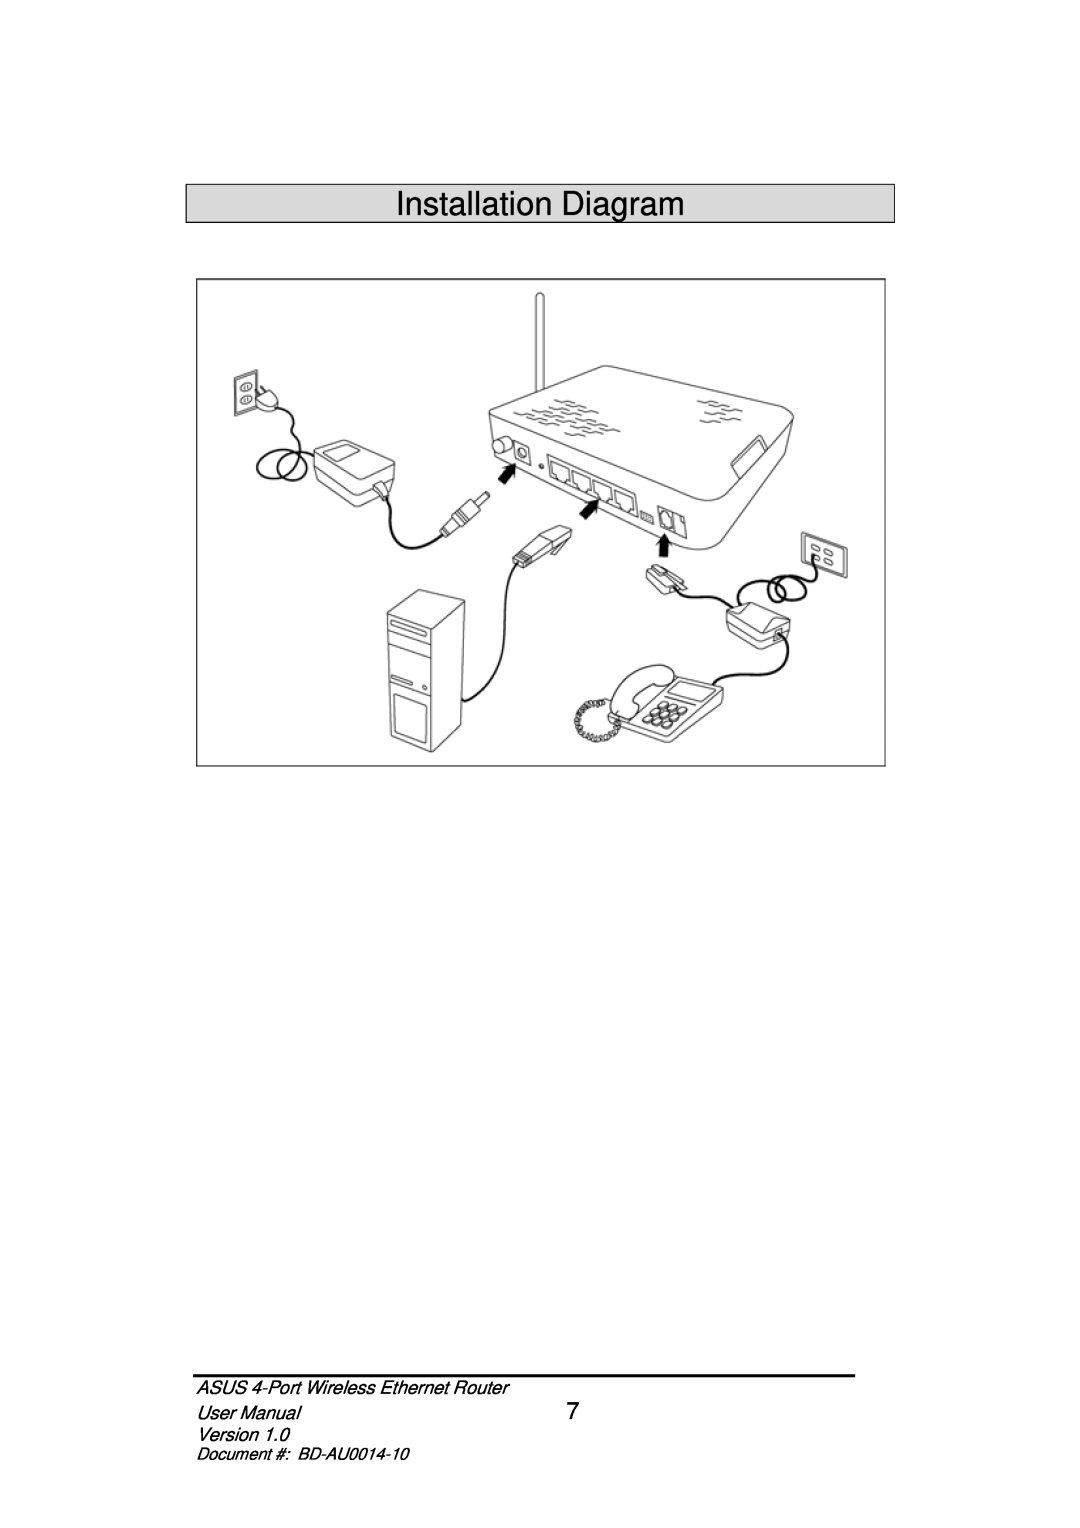 Asus BD-AU0014-10 user manual Installation Diagram, ASUS 4-Port Wireless Ethernet Router, User Manual, Version 